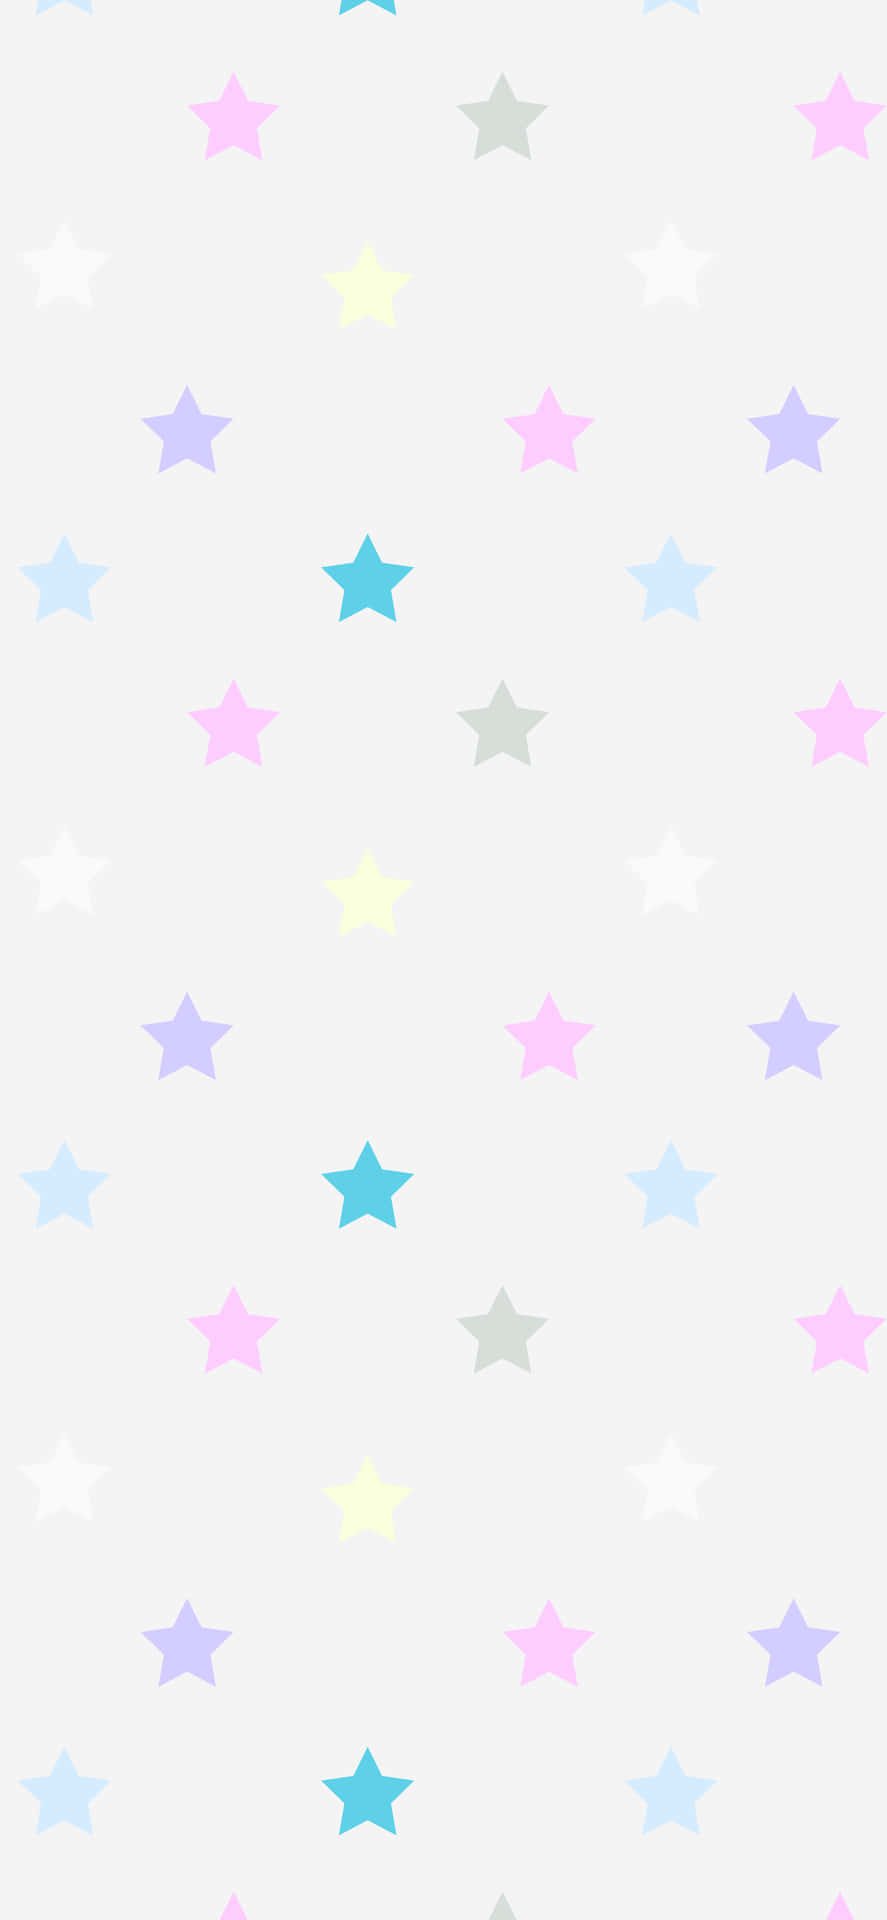 A vibrant purple star shines in the night sky Wallpaper